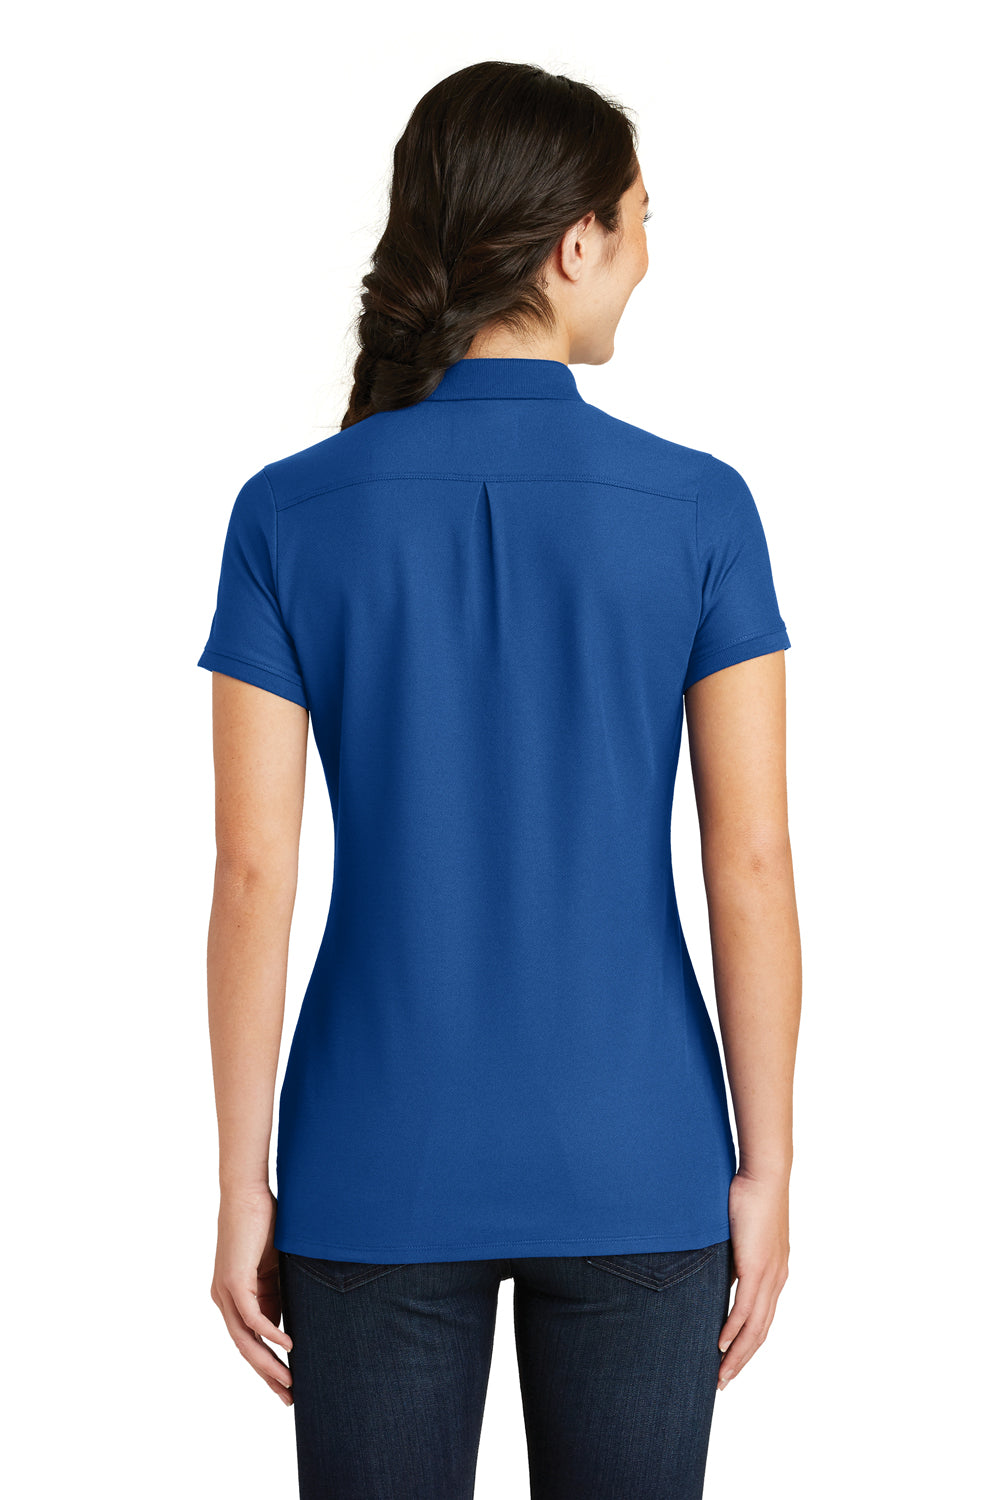 New Era LNEA300 Womens Venue Home Plate Moisture Wicking Short Sleeve Polo Shirt Royal Blue Back